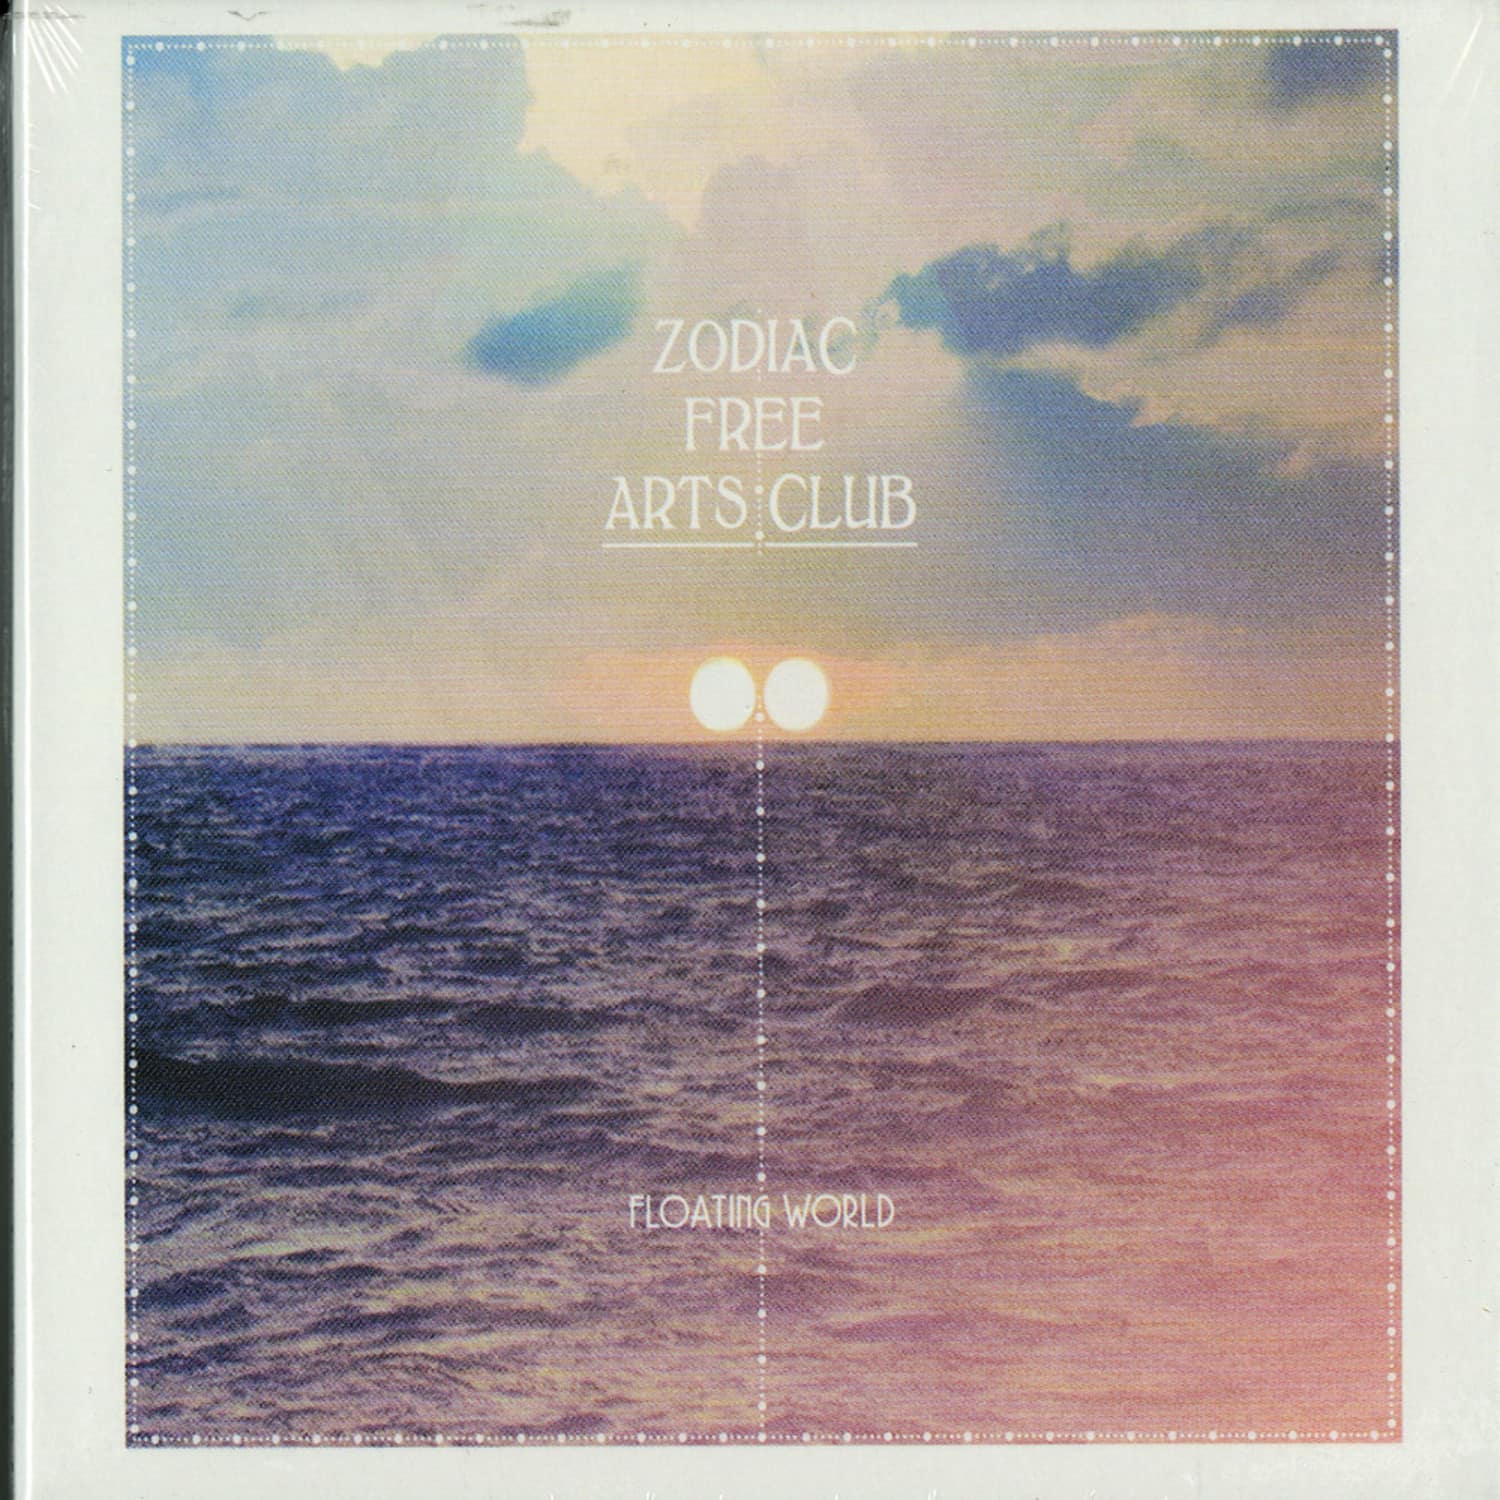 Zodiac Free Arts Club - FLOATING WORLD 